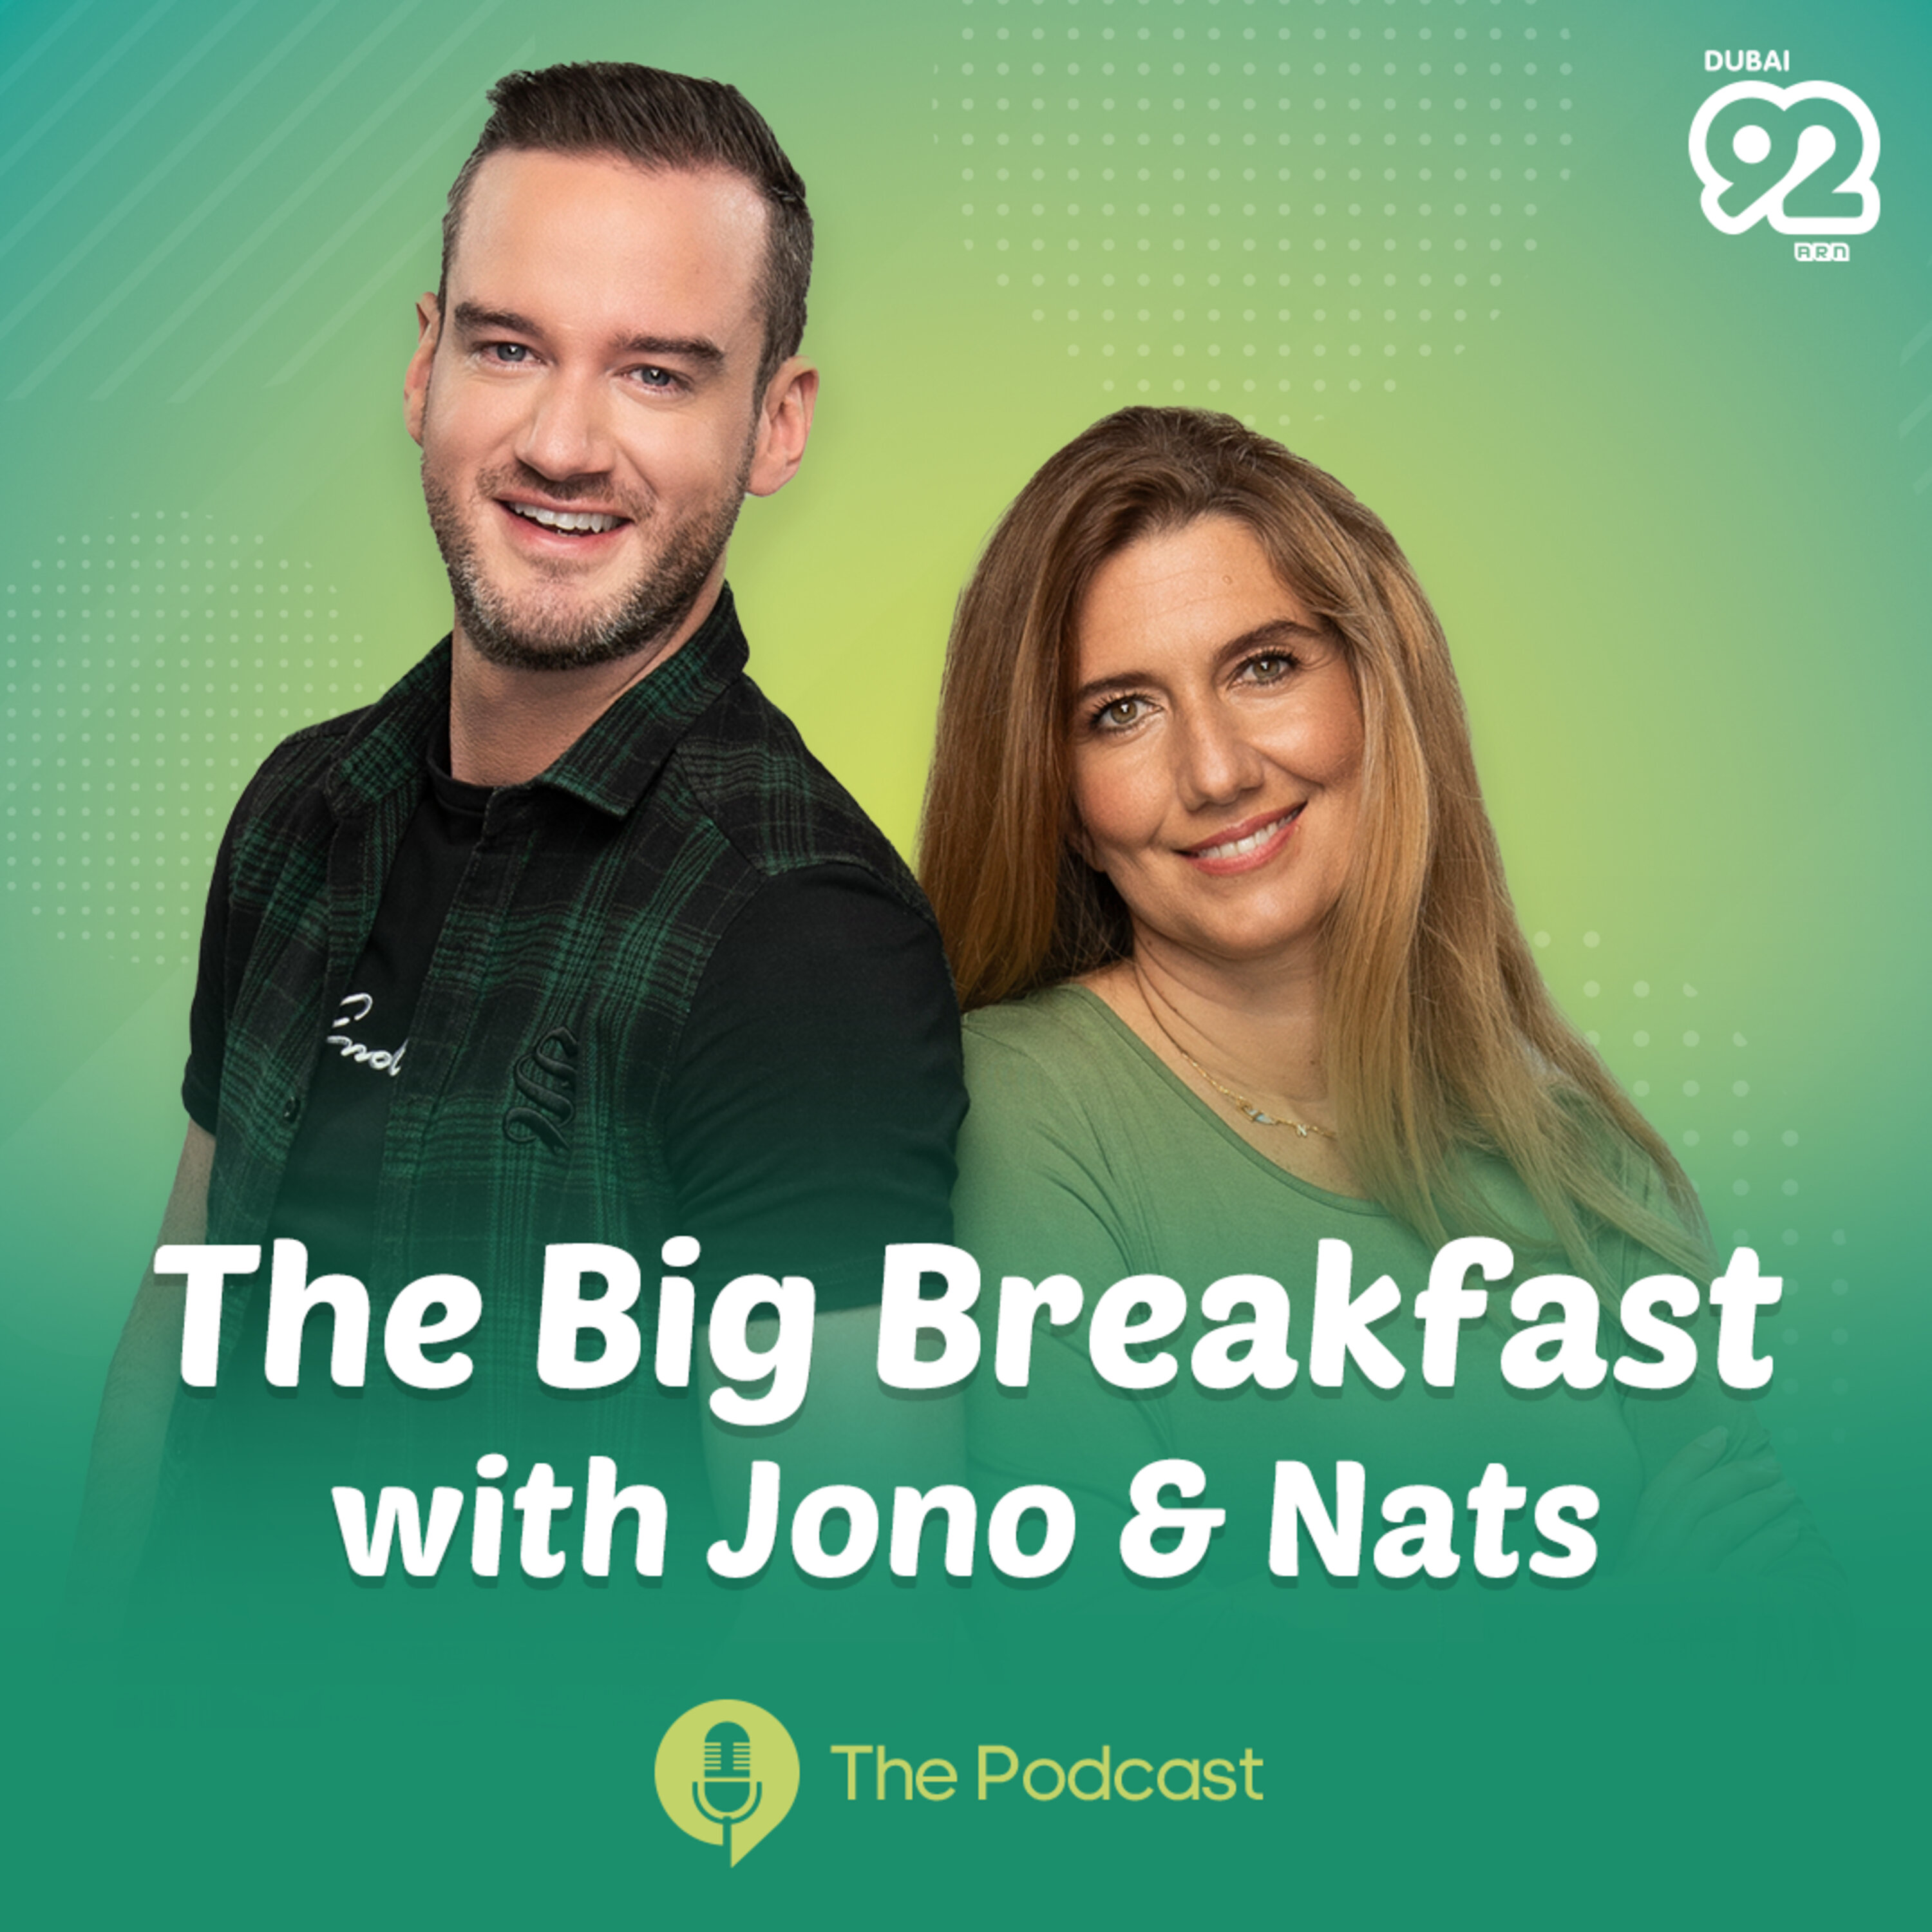 The Big Breakfast Podcast with Jono & Nats